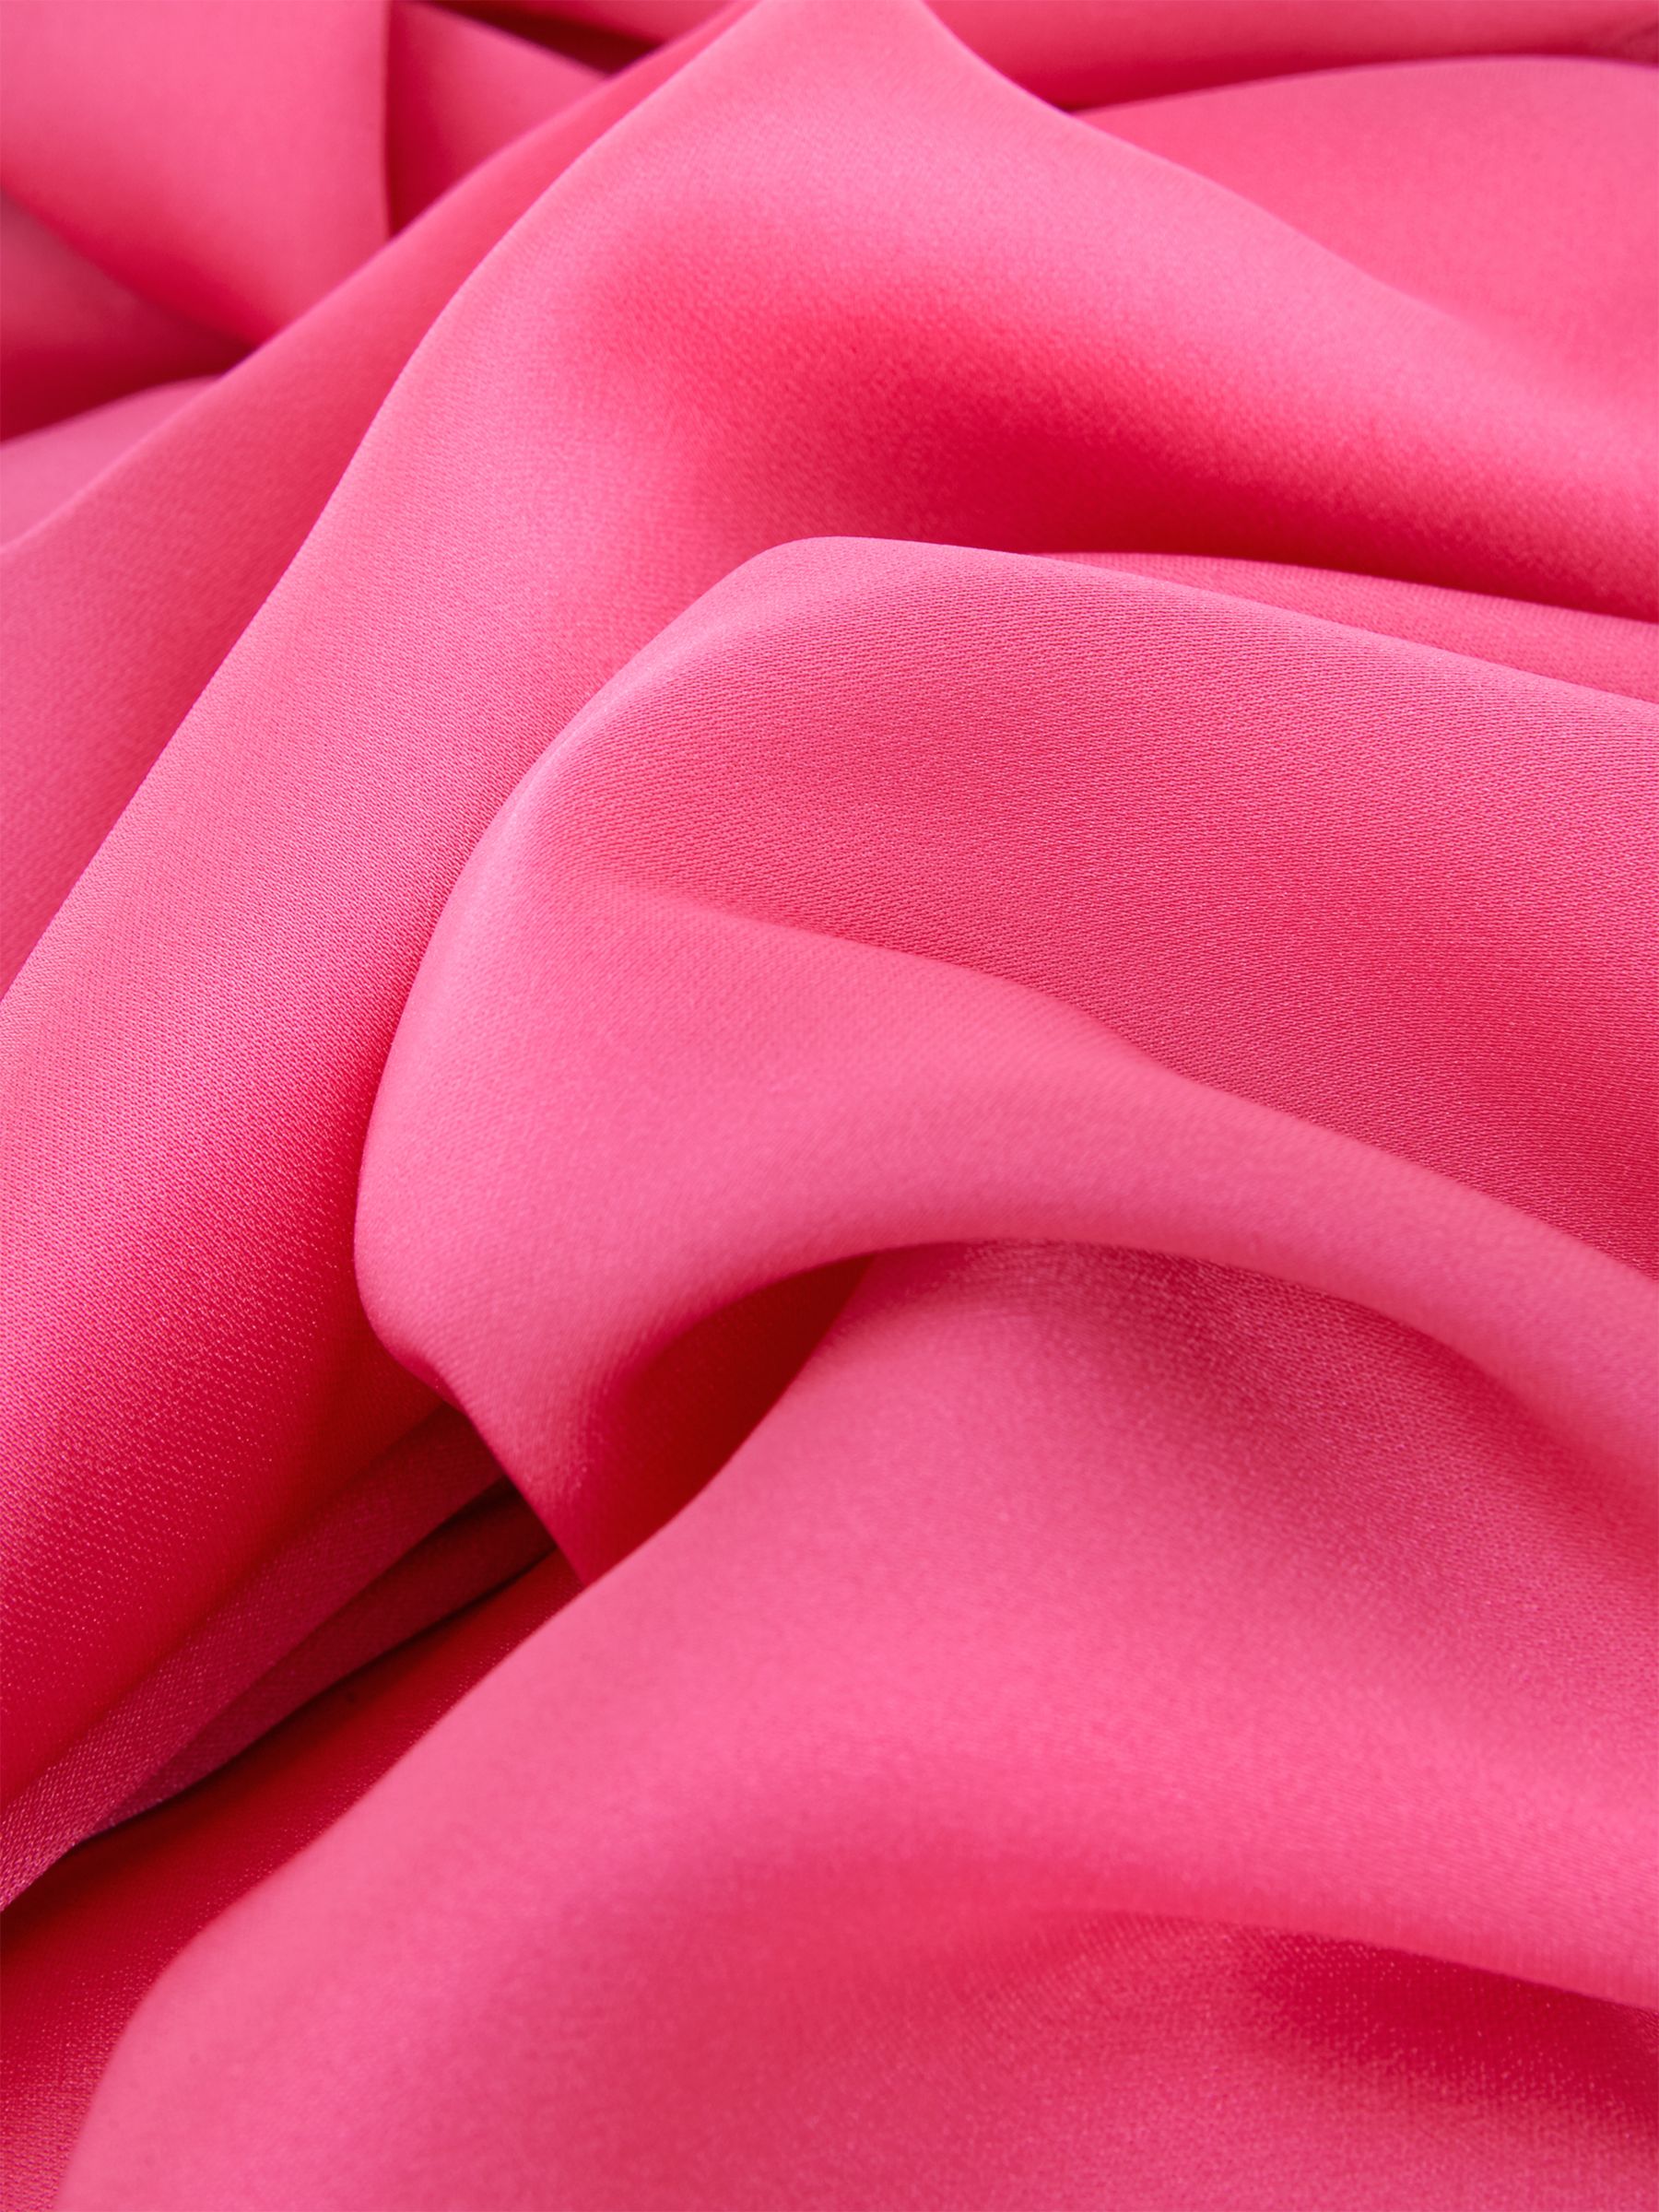 Hobbs Orelia Plain Dress, Party Pink, 10